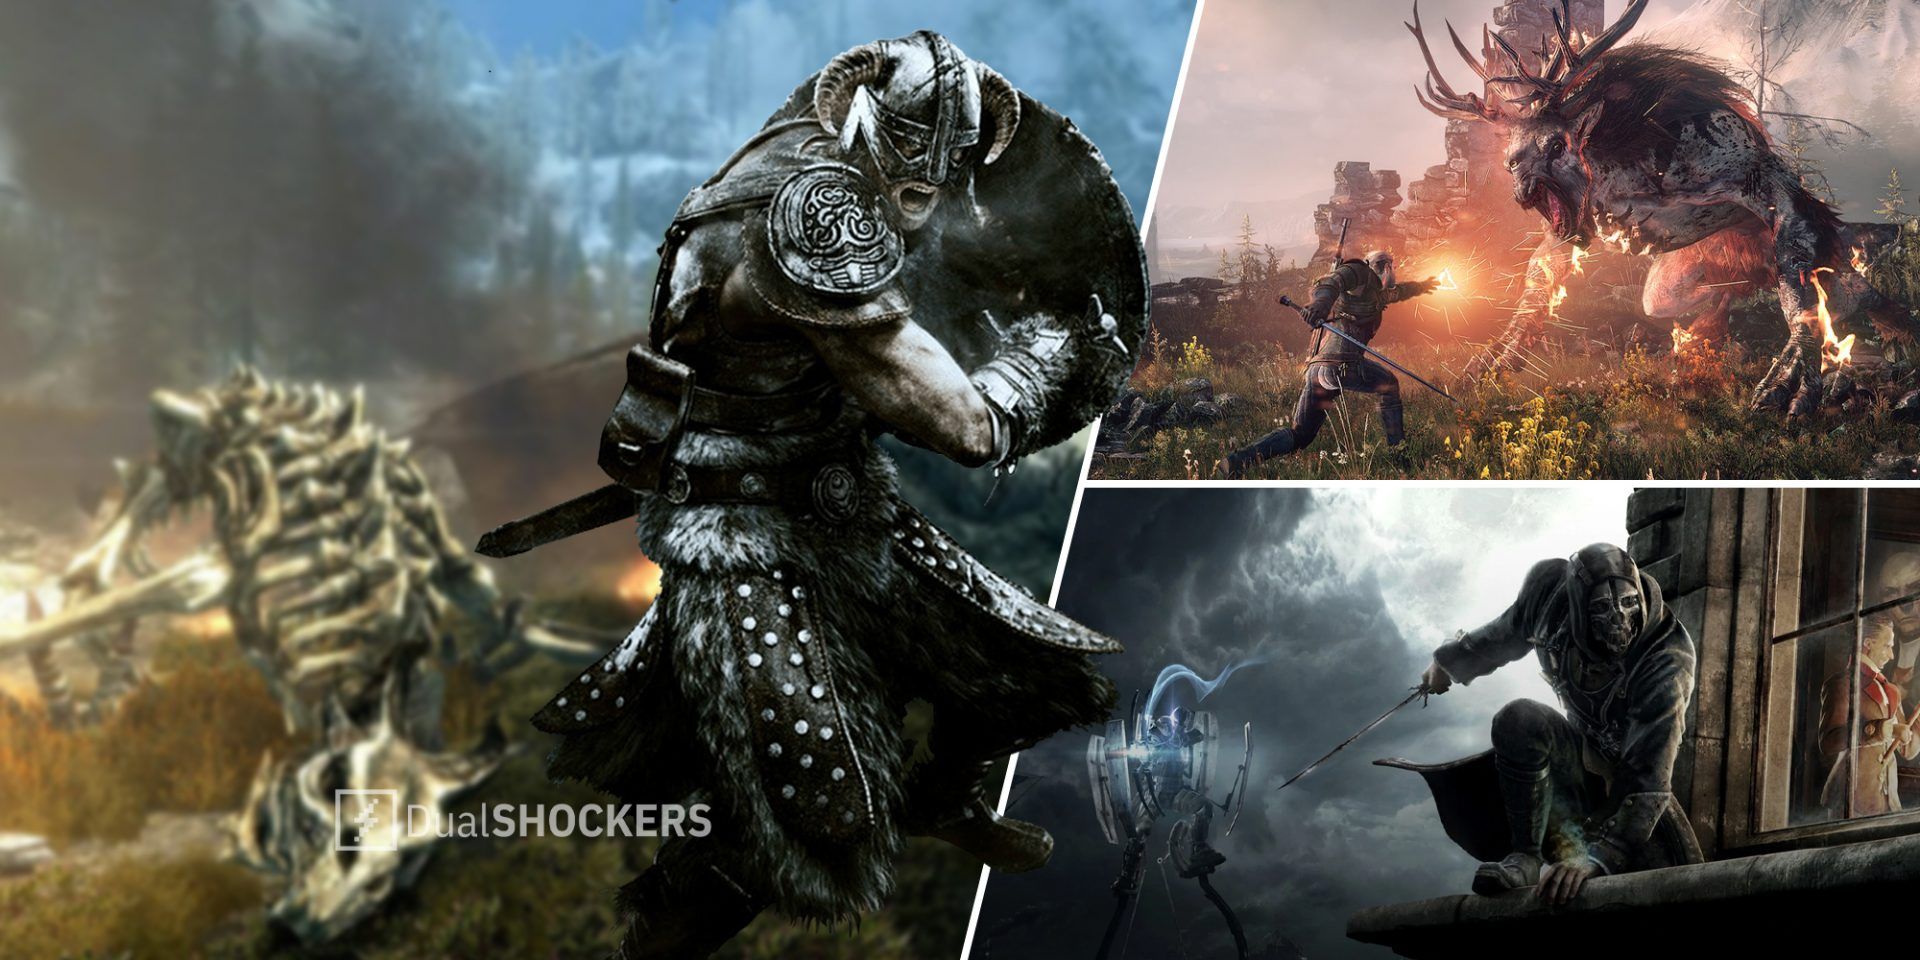 The Elder Scrolls V Skyrim Dovahkiin on left, The Witcher 3: Wild Hunt Geralt on top right, Dishonored Corvo on bottom right